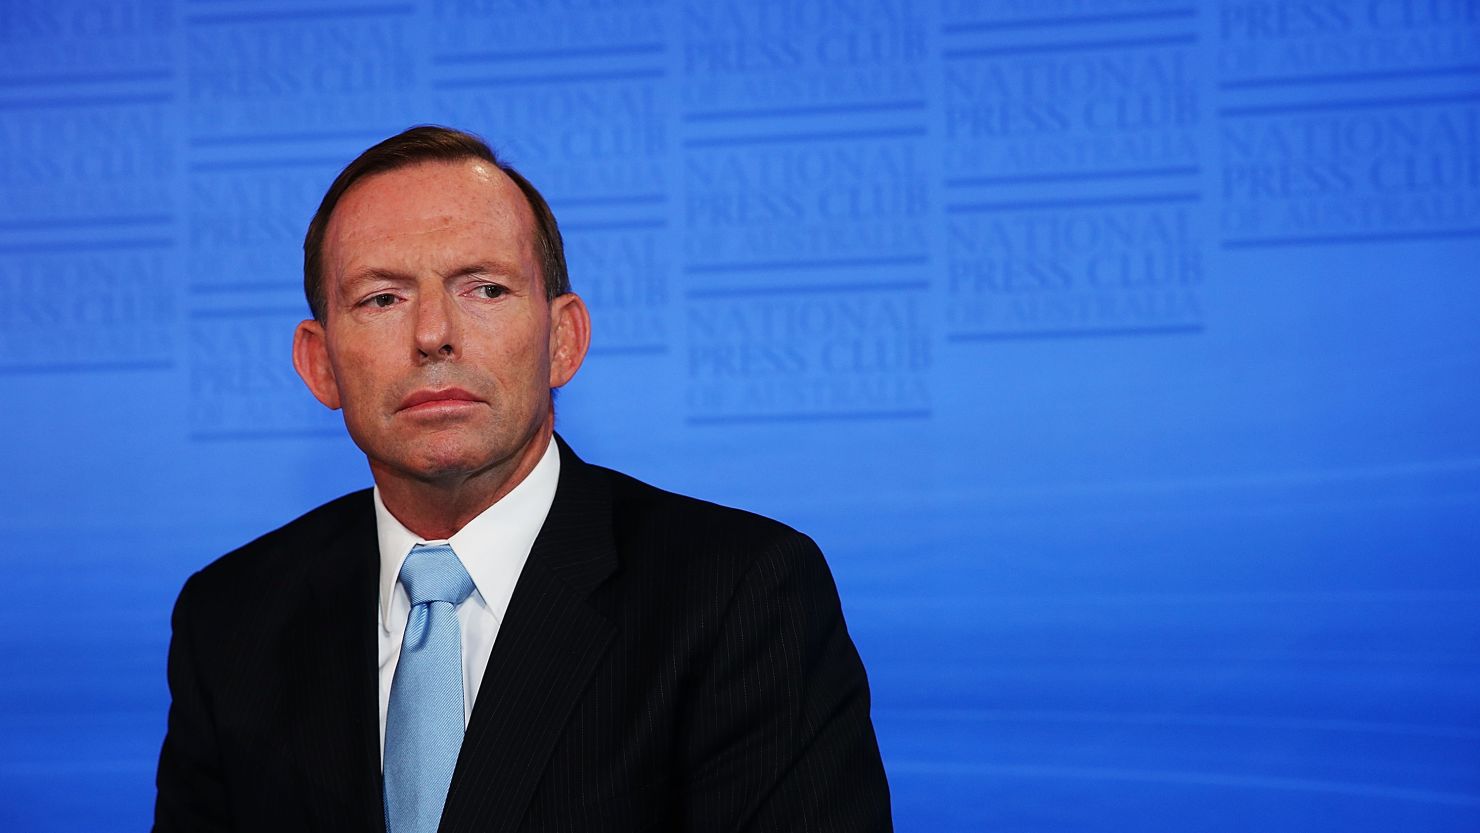 Prime Minister Tony Abbott prepares to speak at the National Press Club on February 2 in Canberra, Australia. 